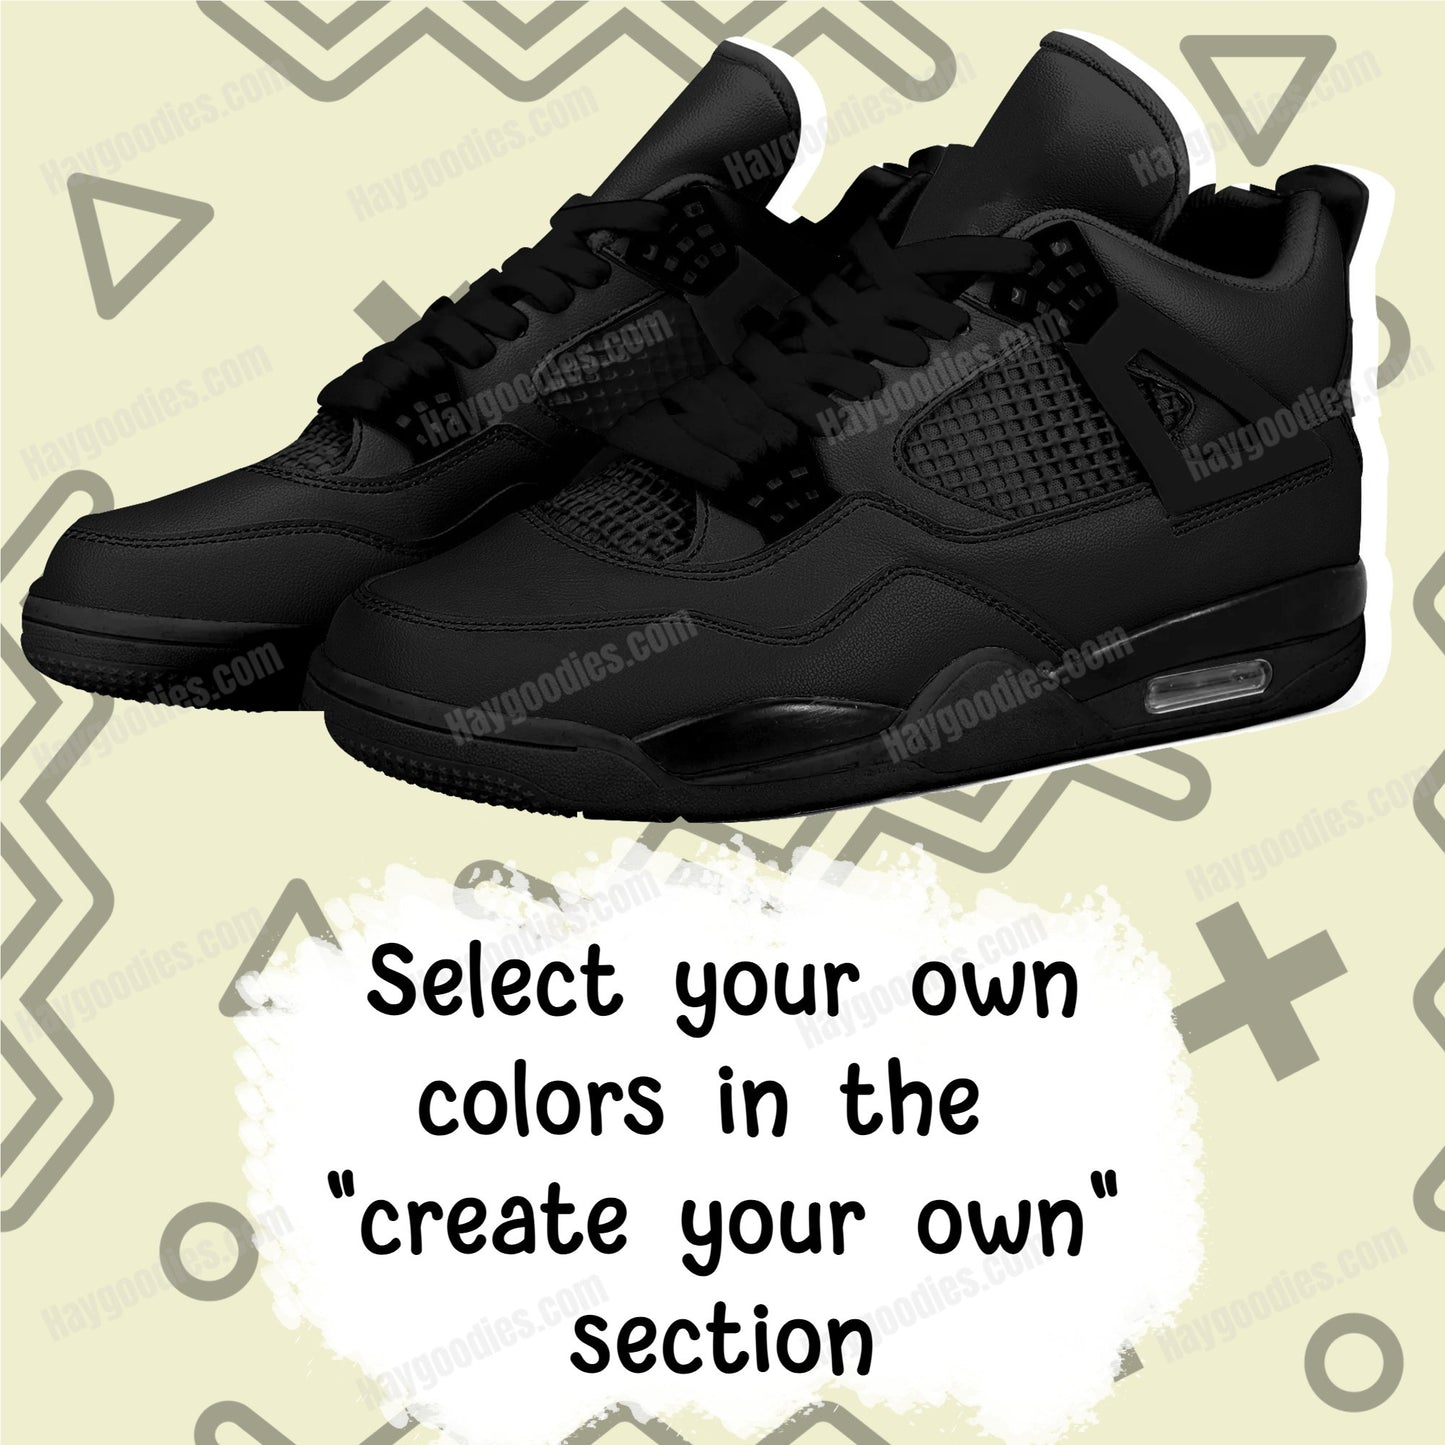 Black Color Retro Low Top J4 Style Sneakers